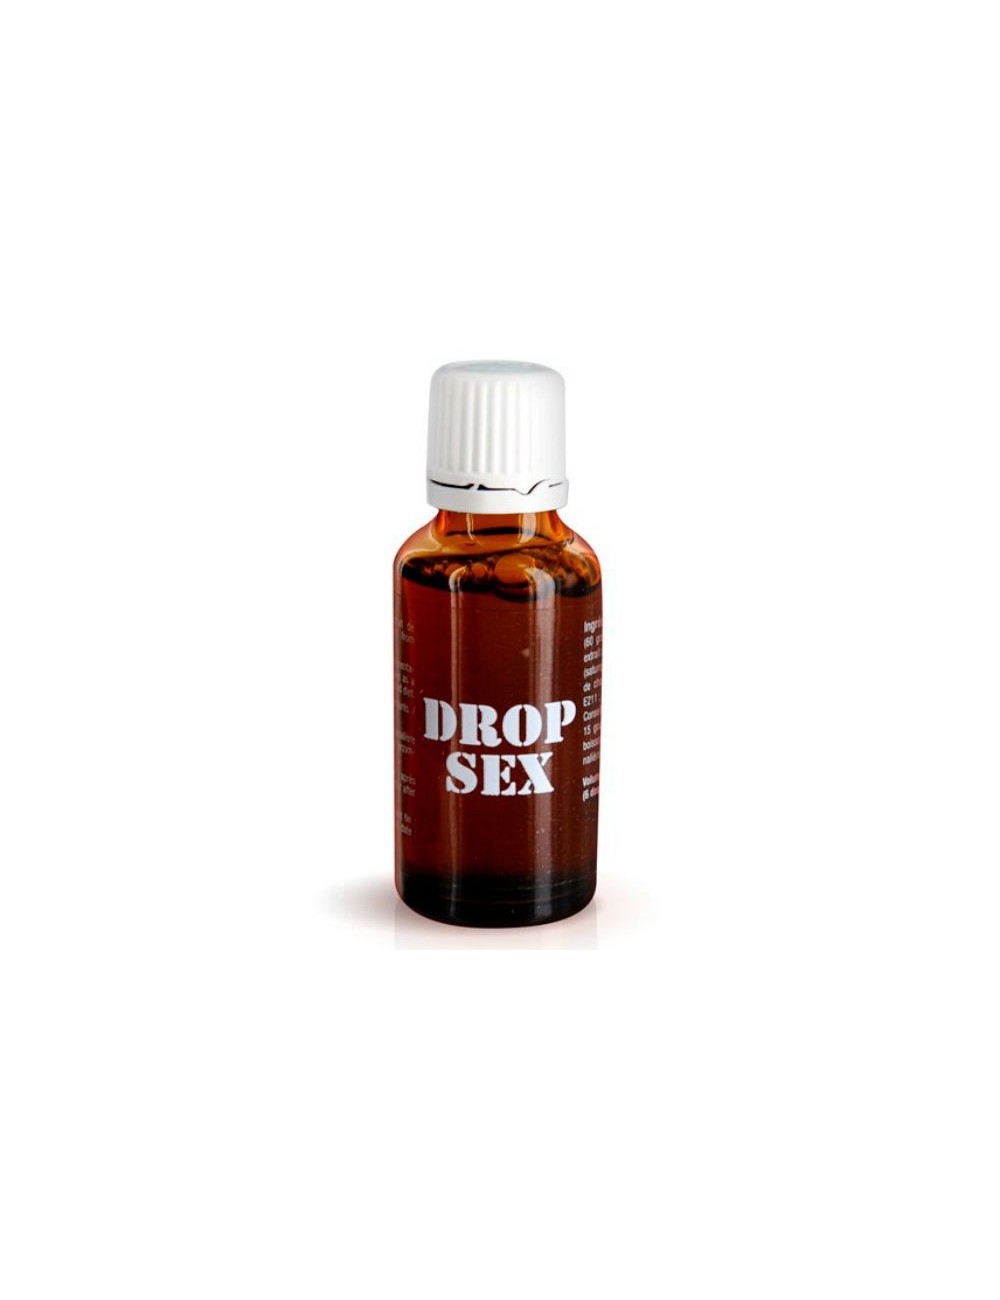 DROP SEXE 20ML - Aphrodisiaques - Ruf